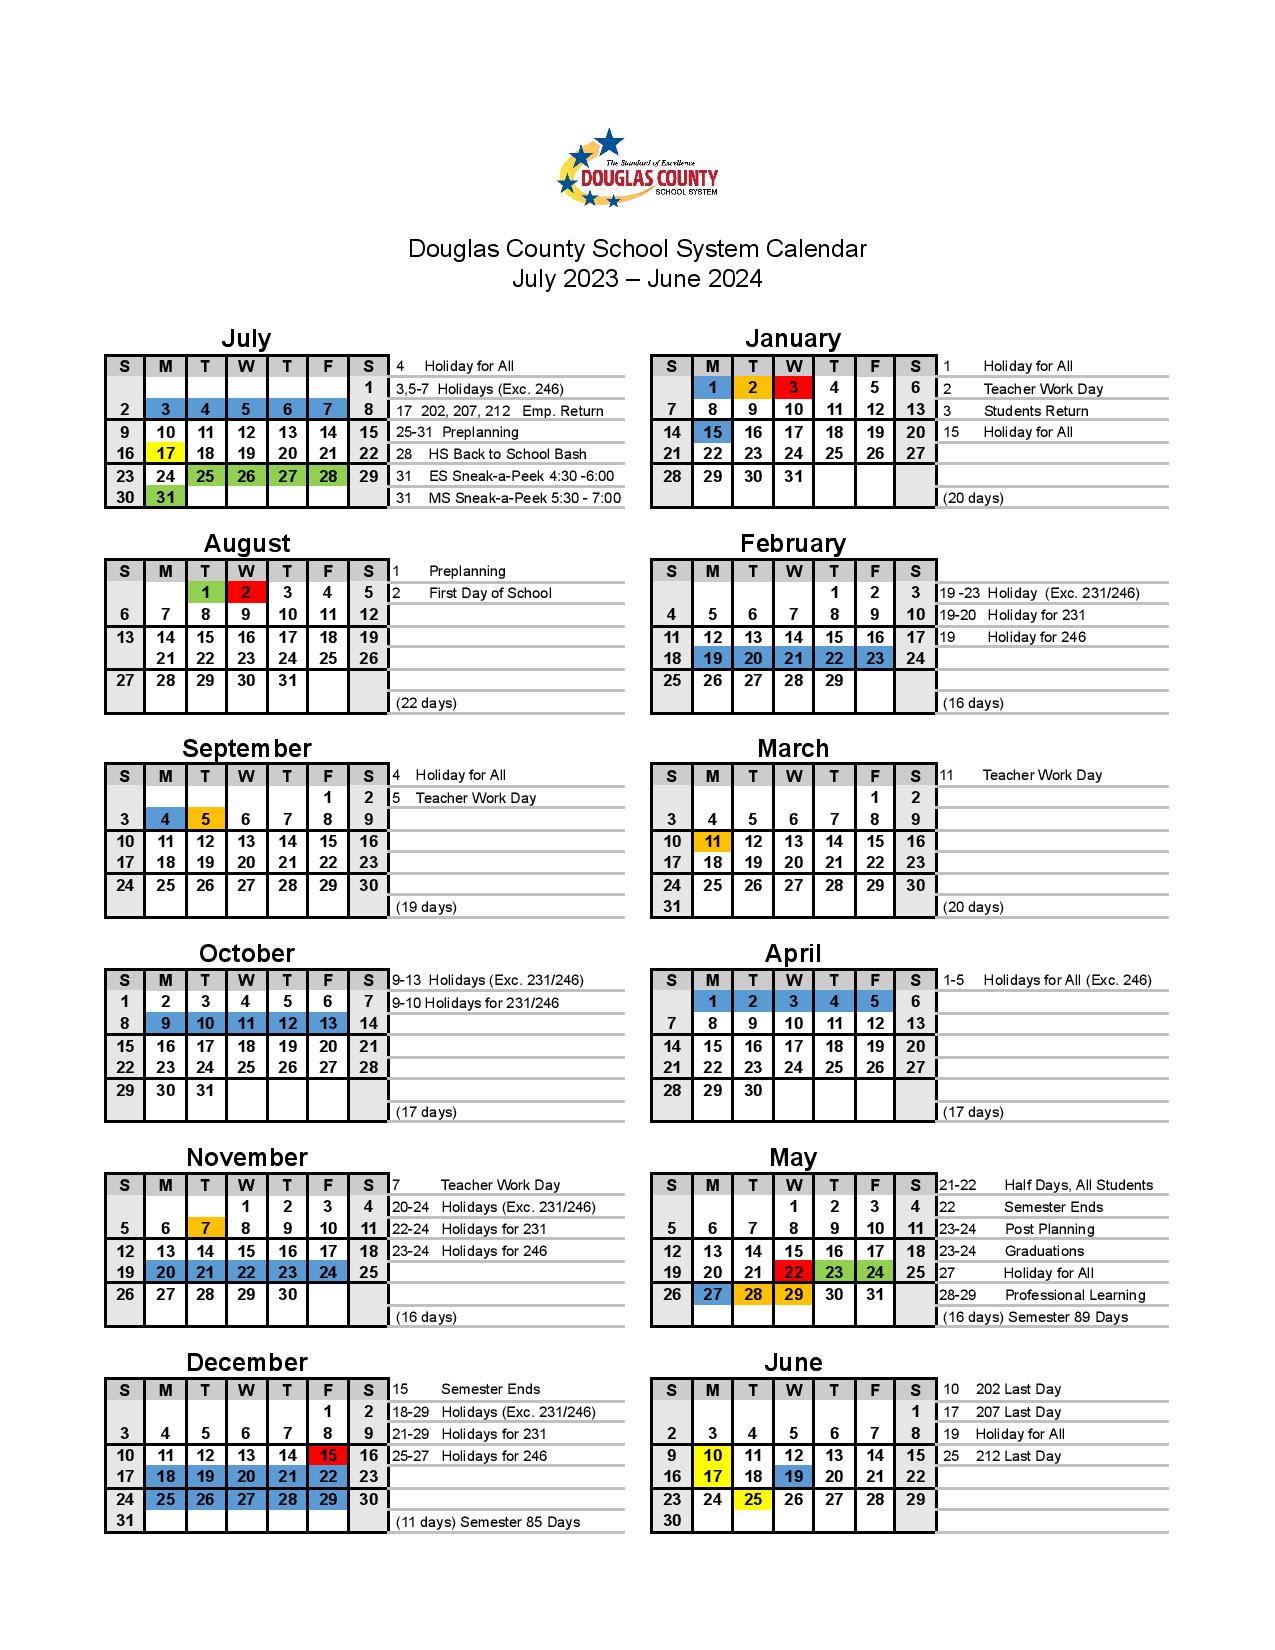 forsyth-county-schools-calendar-2023-2024